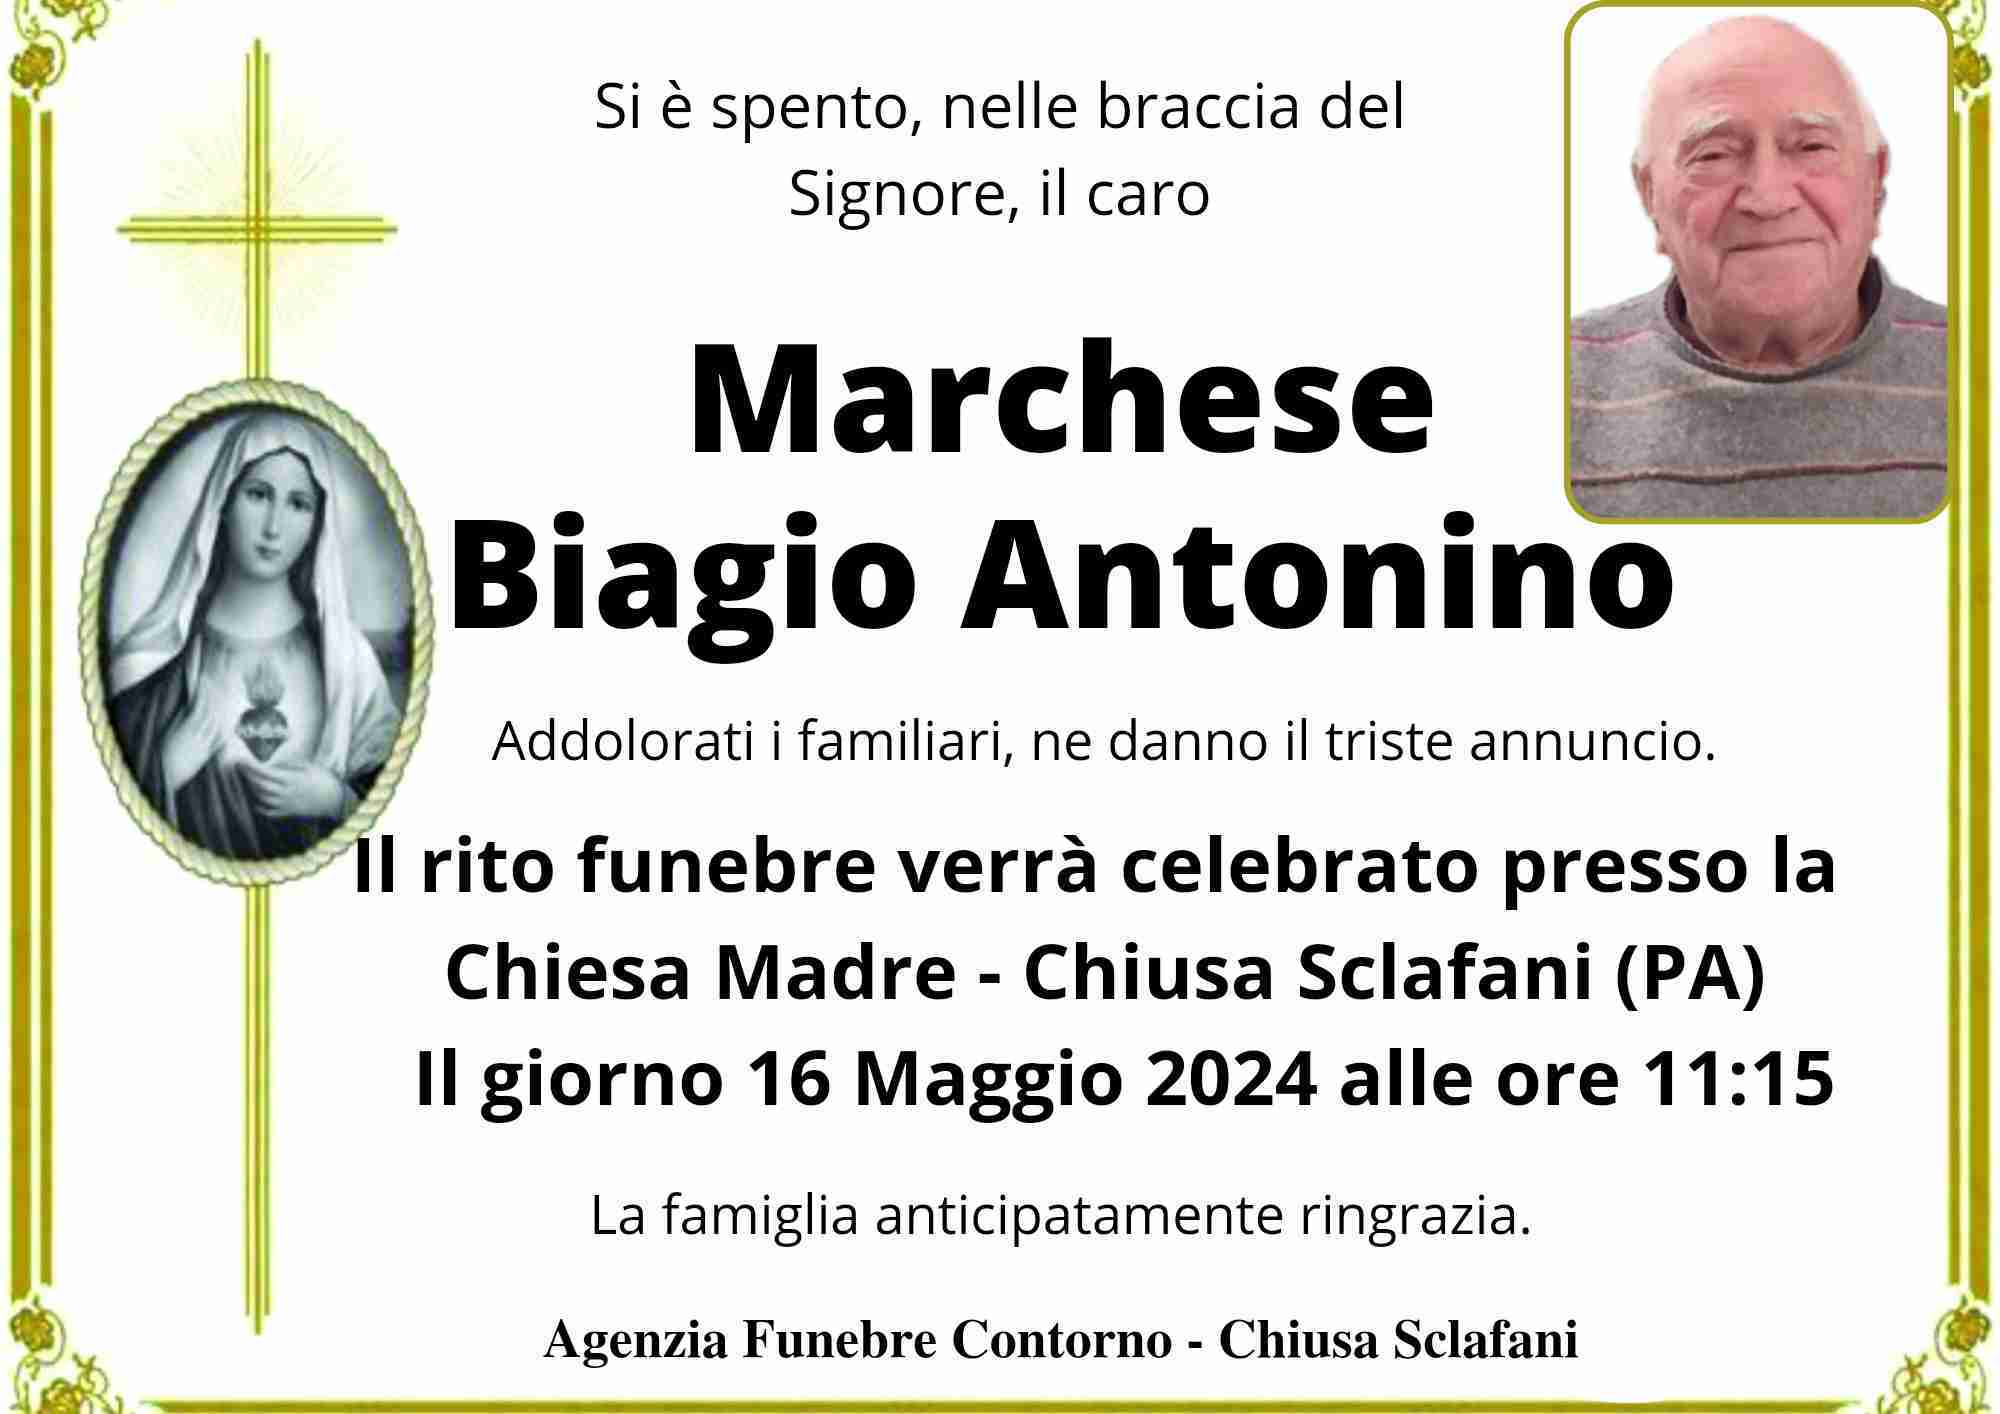 Biagio Antonino Marchese